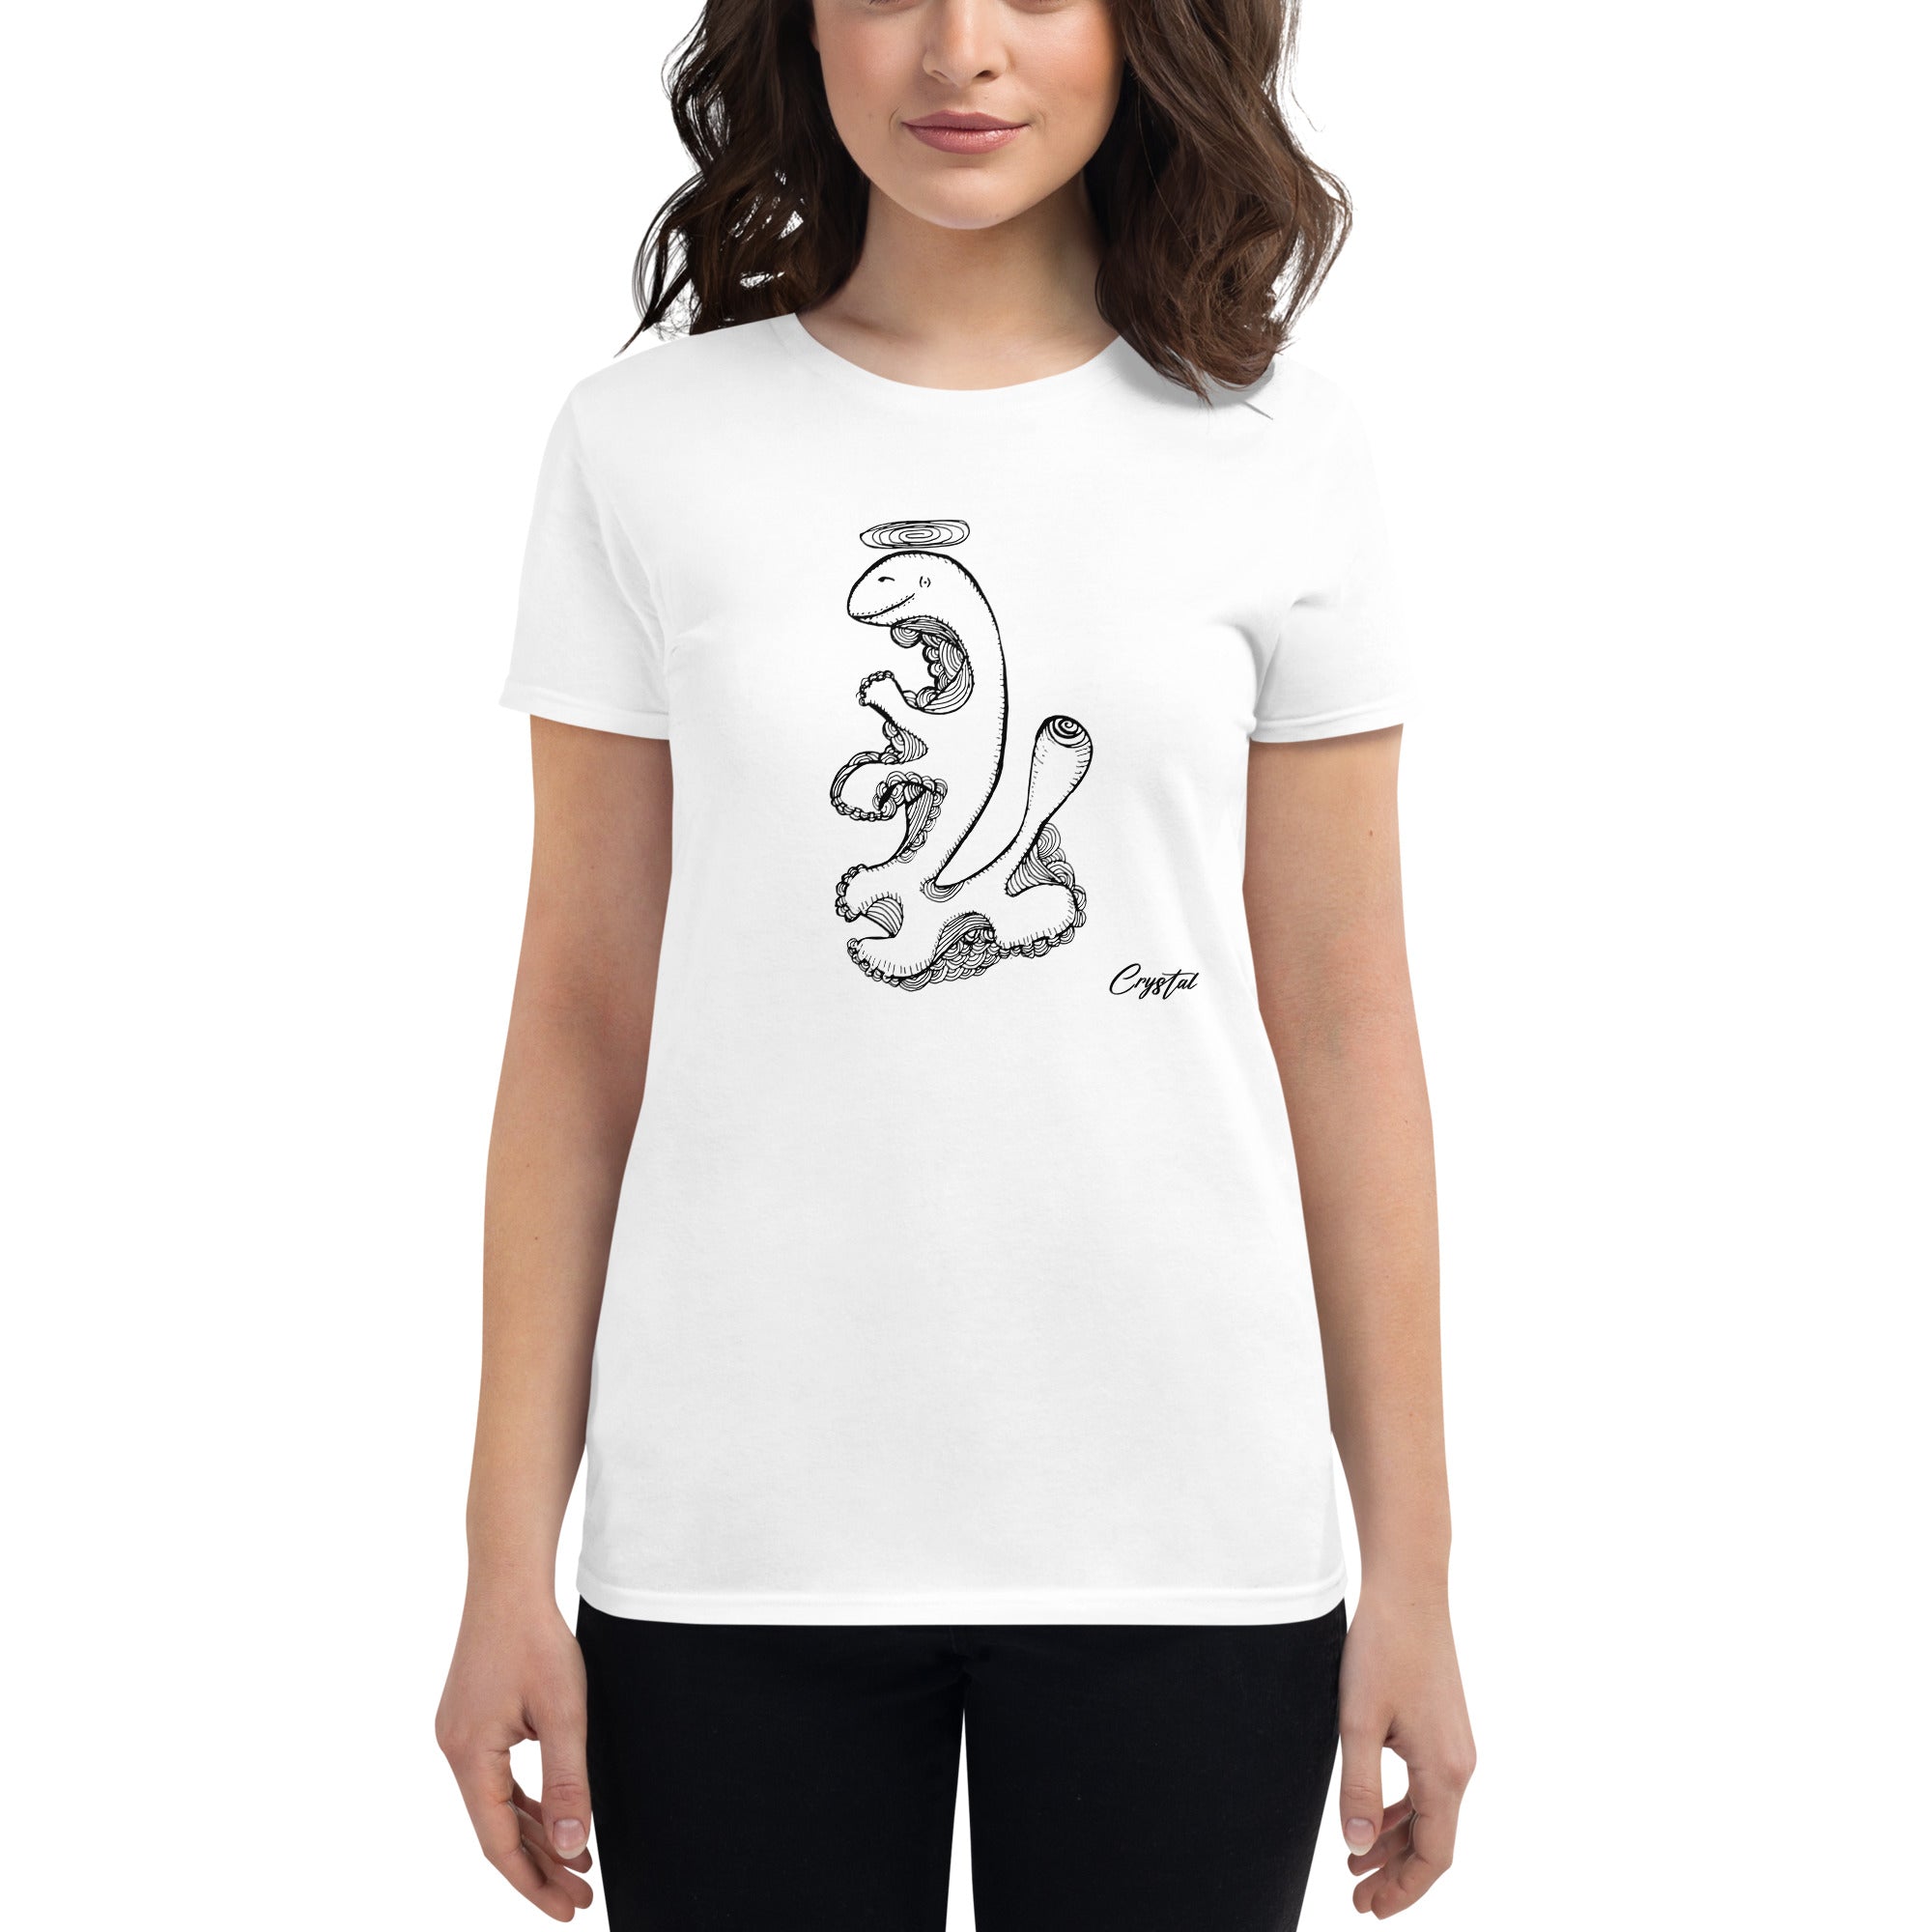 Dinosaur Walking with Halo - Cute & Creepy "Stay Weird" Cartoon Illustration Women's short sleeve t-shirt